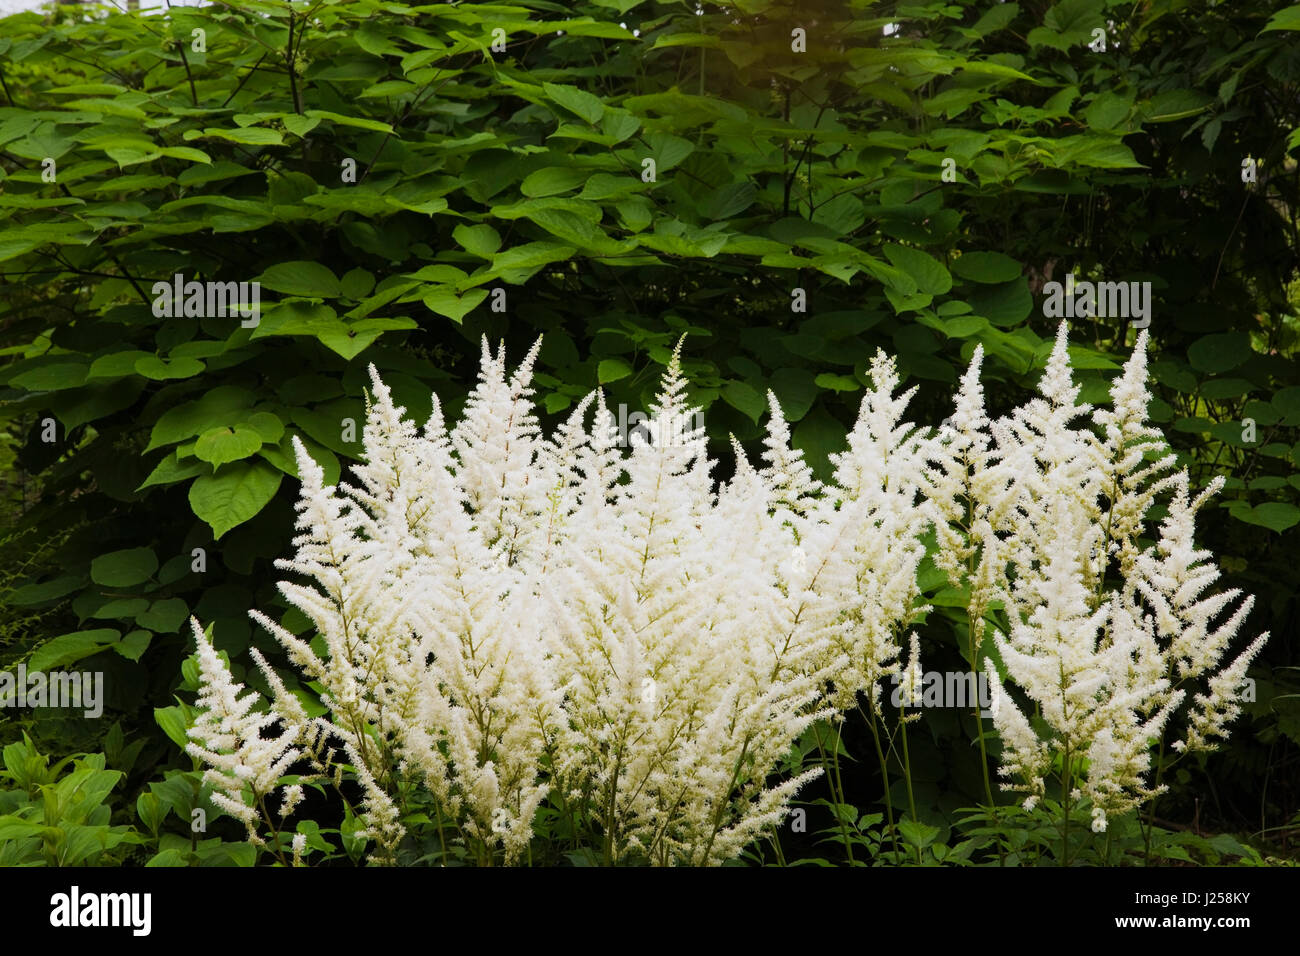 White astilbe flowers against green leaf background in a backyard garden in summer. Stock Photo